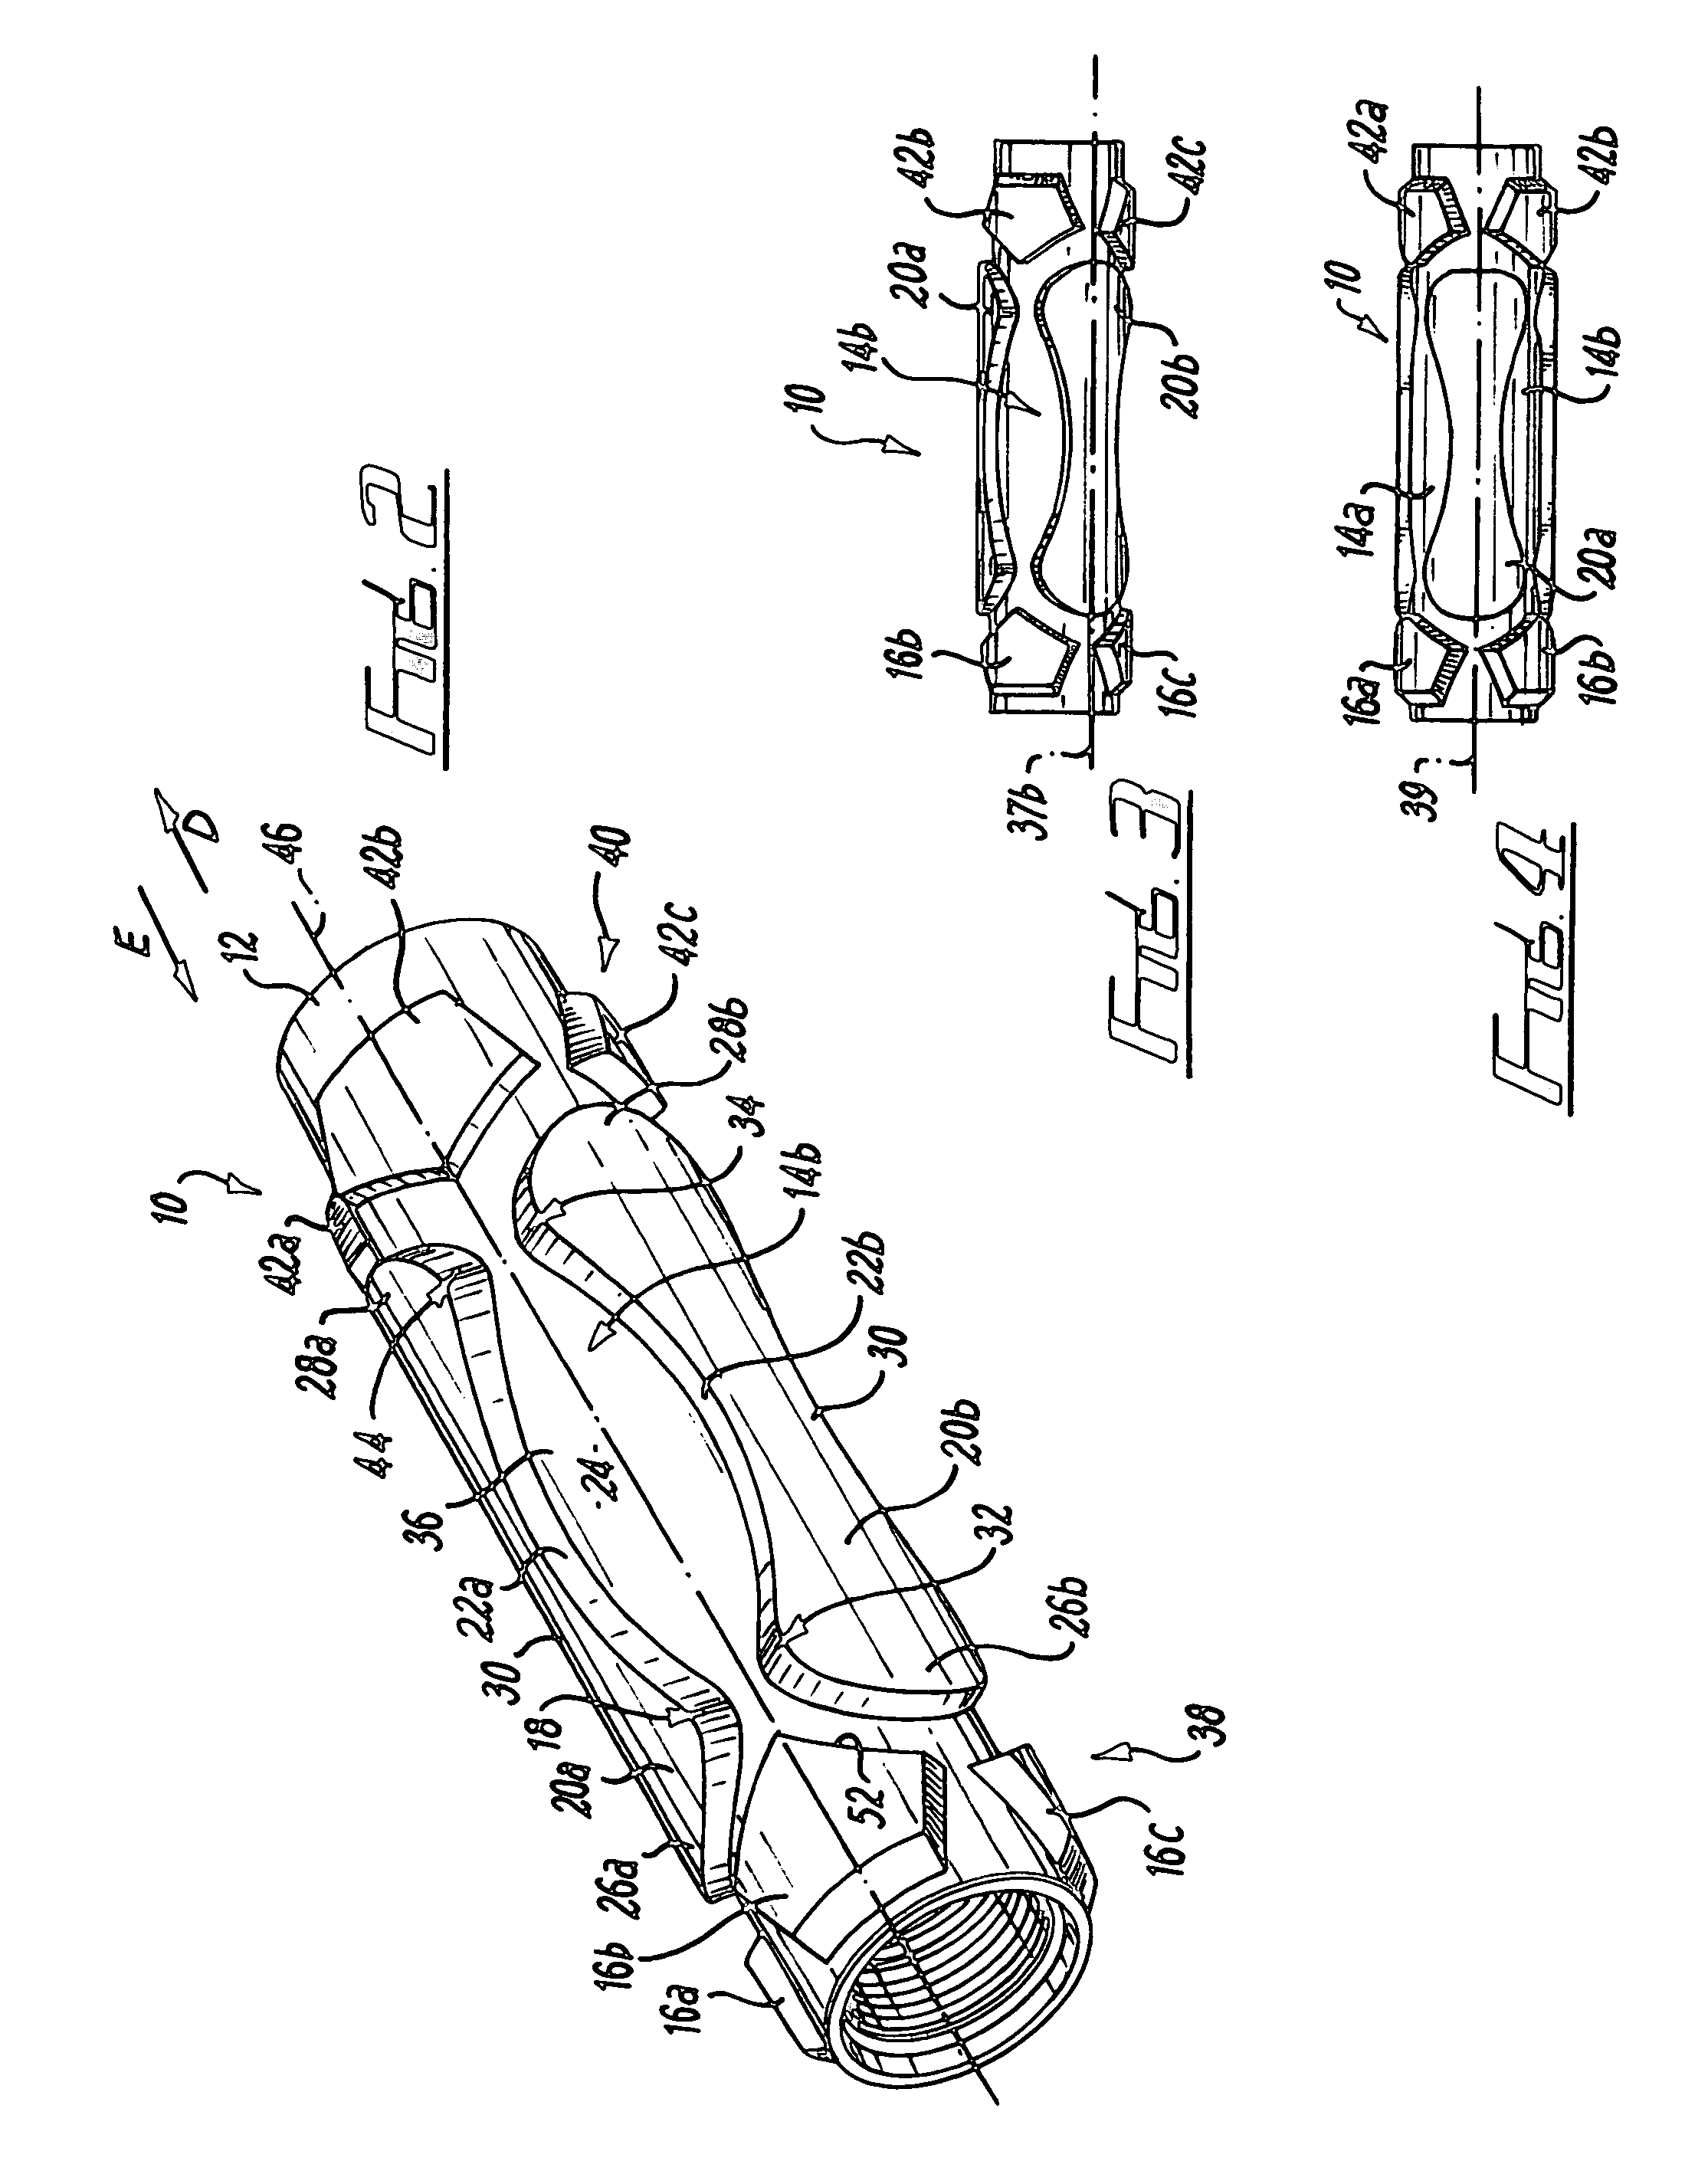 Downhole apparatus